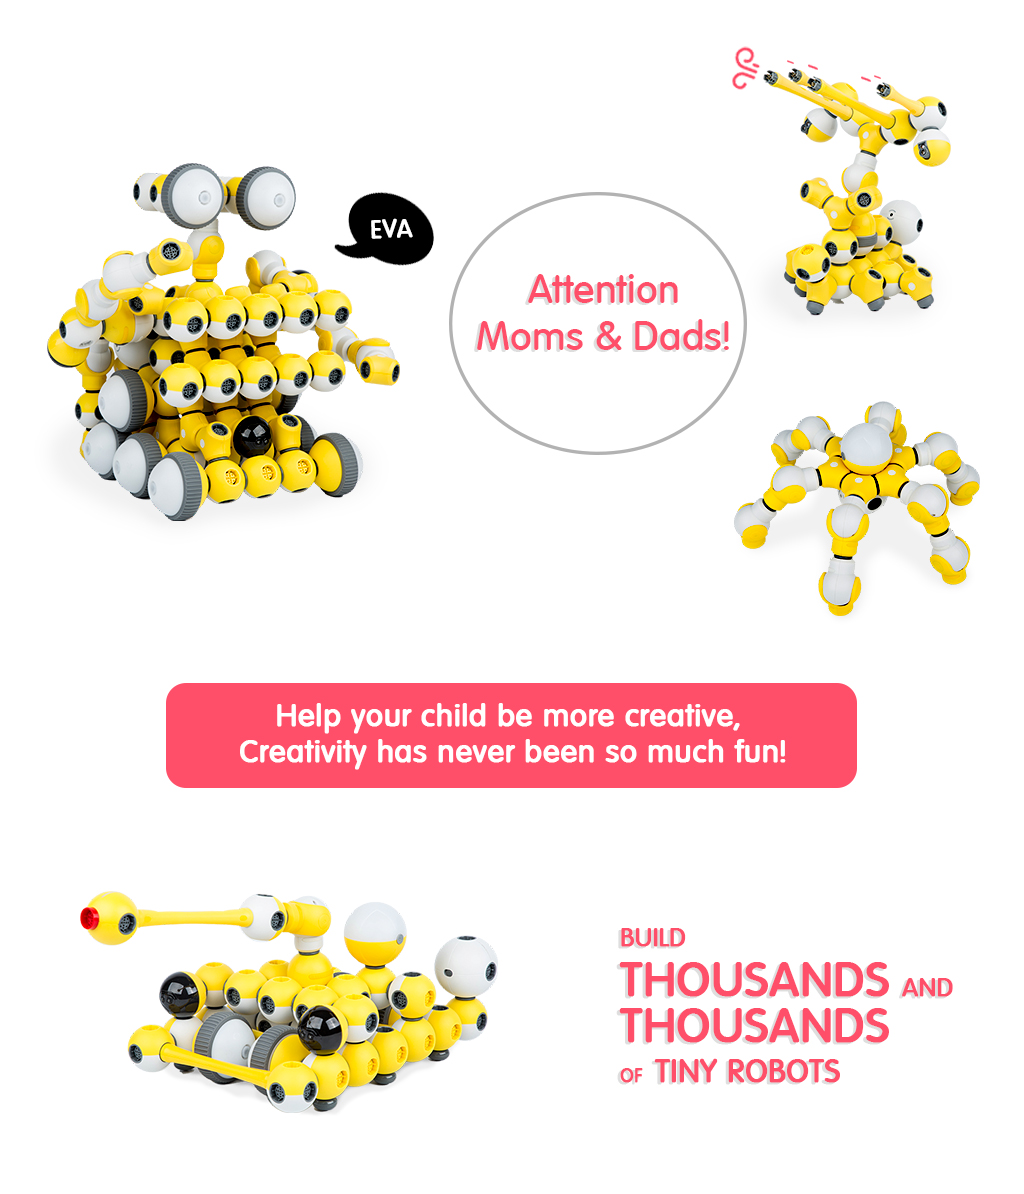 Bellrobot Launches Mabot, an Interactive Robotics Learning Kit for Children